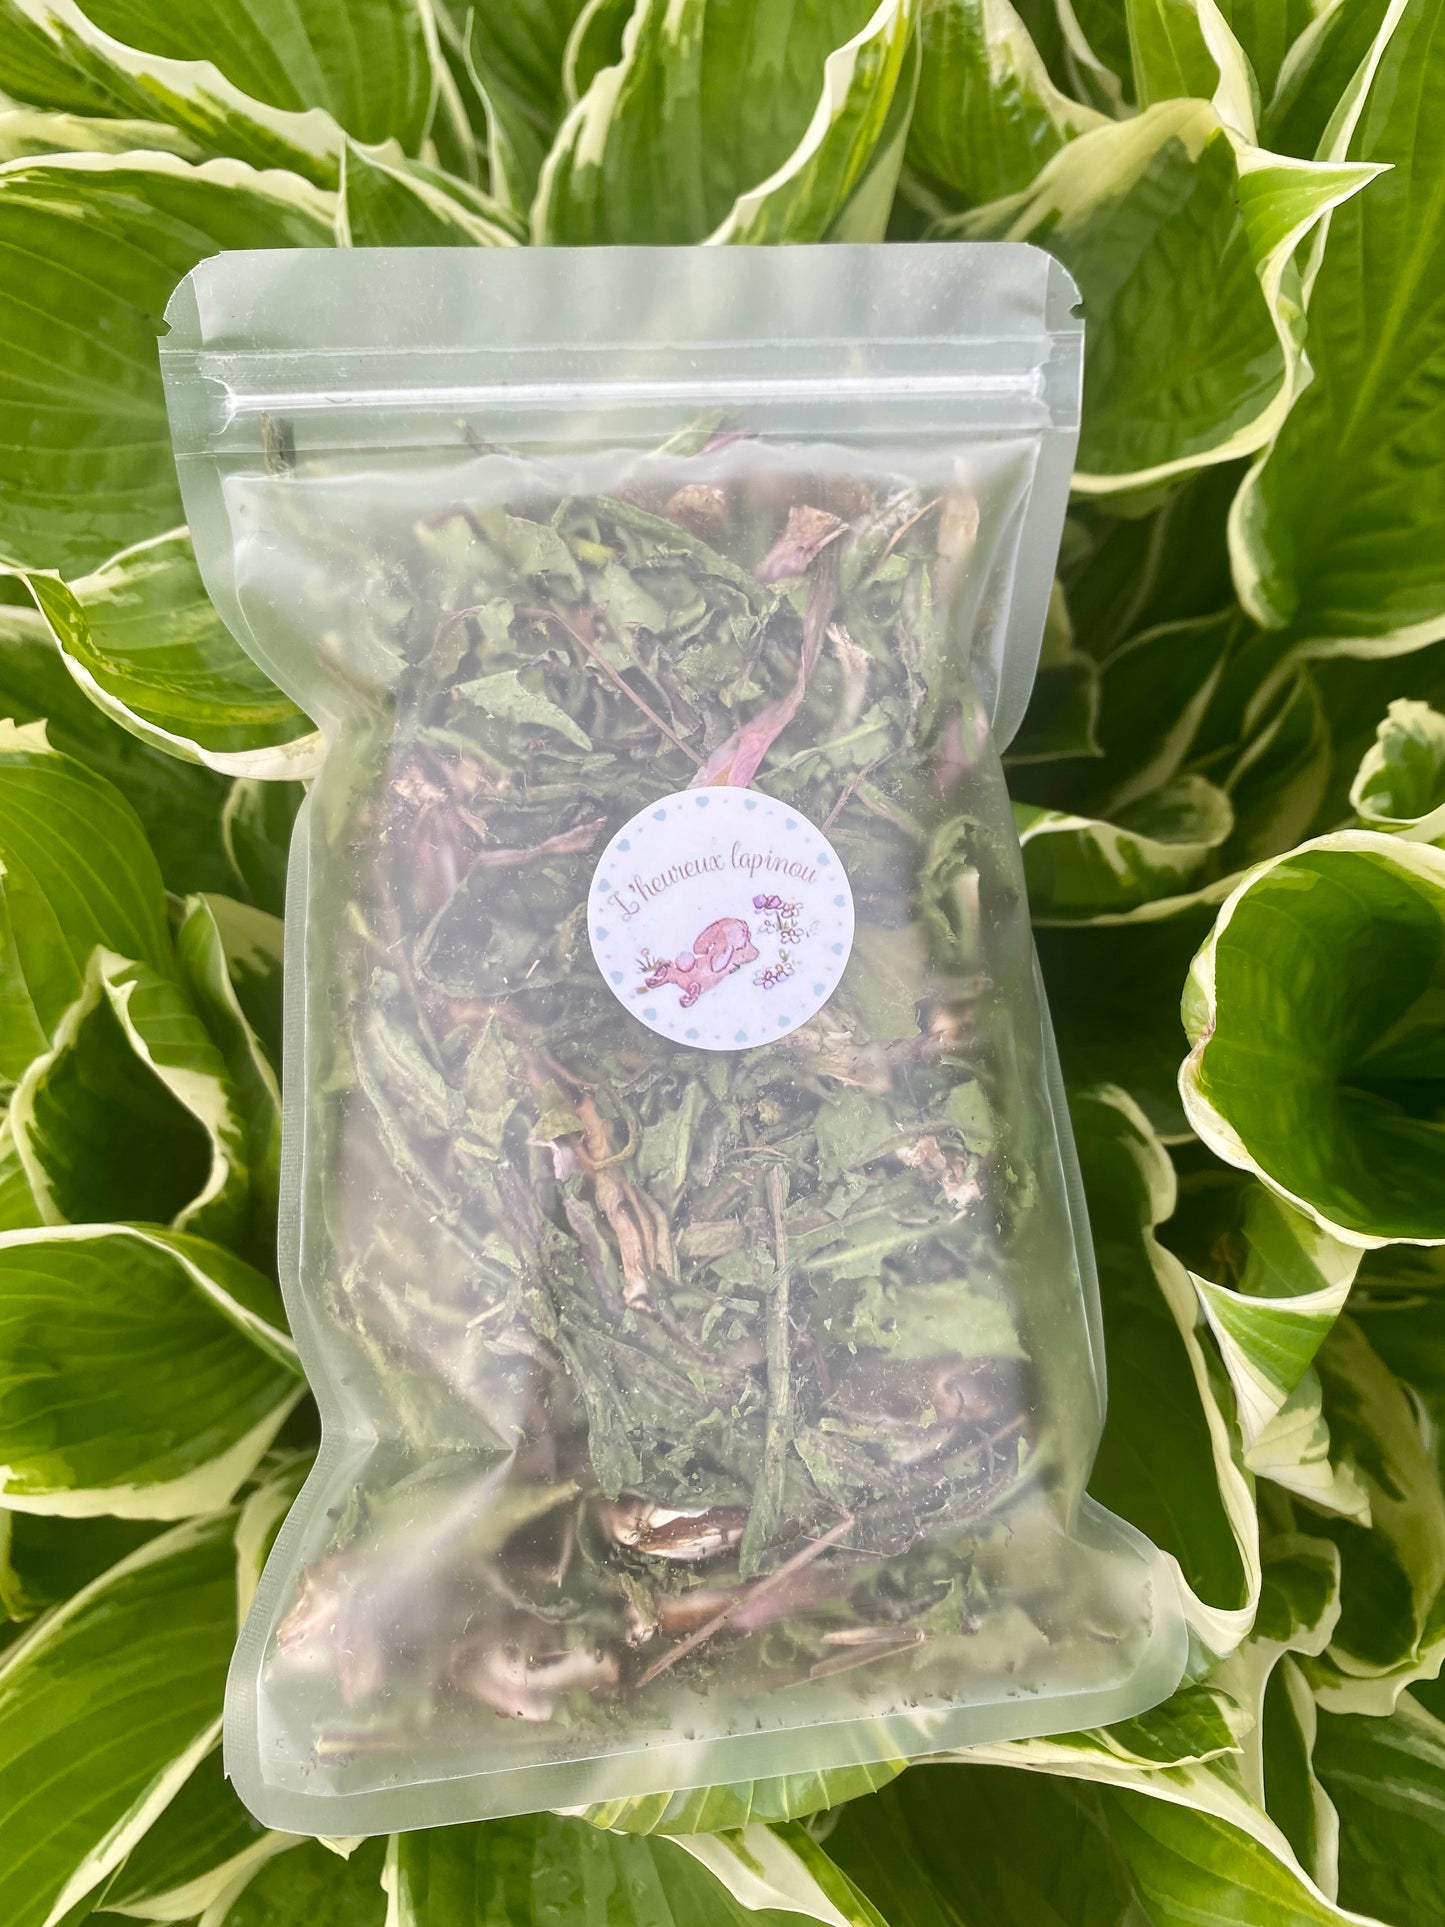 Dandelion leaves 100% natural treat - Product of Quebec 